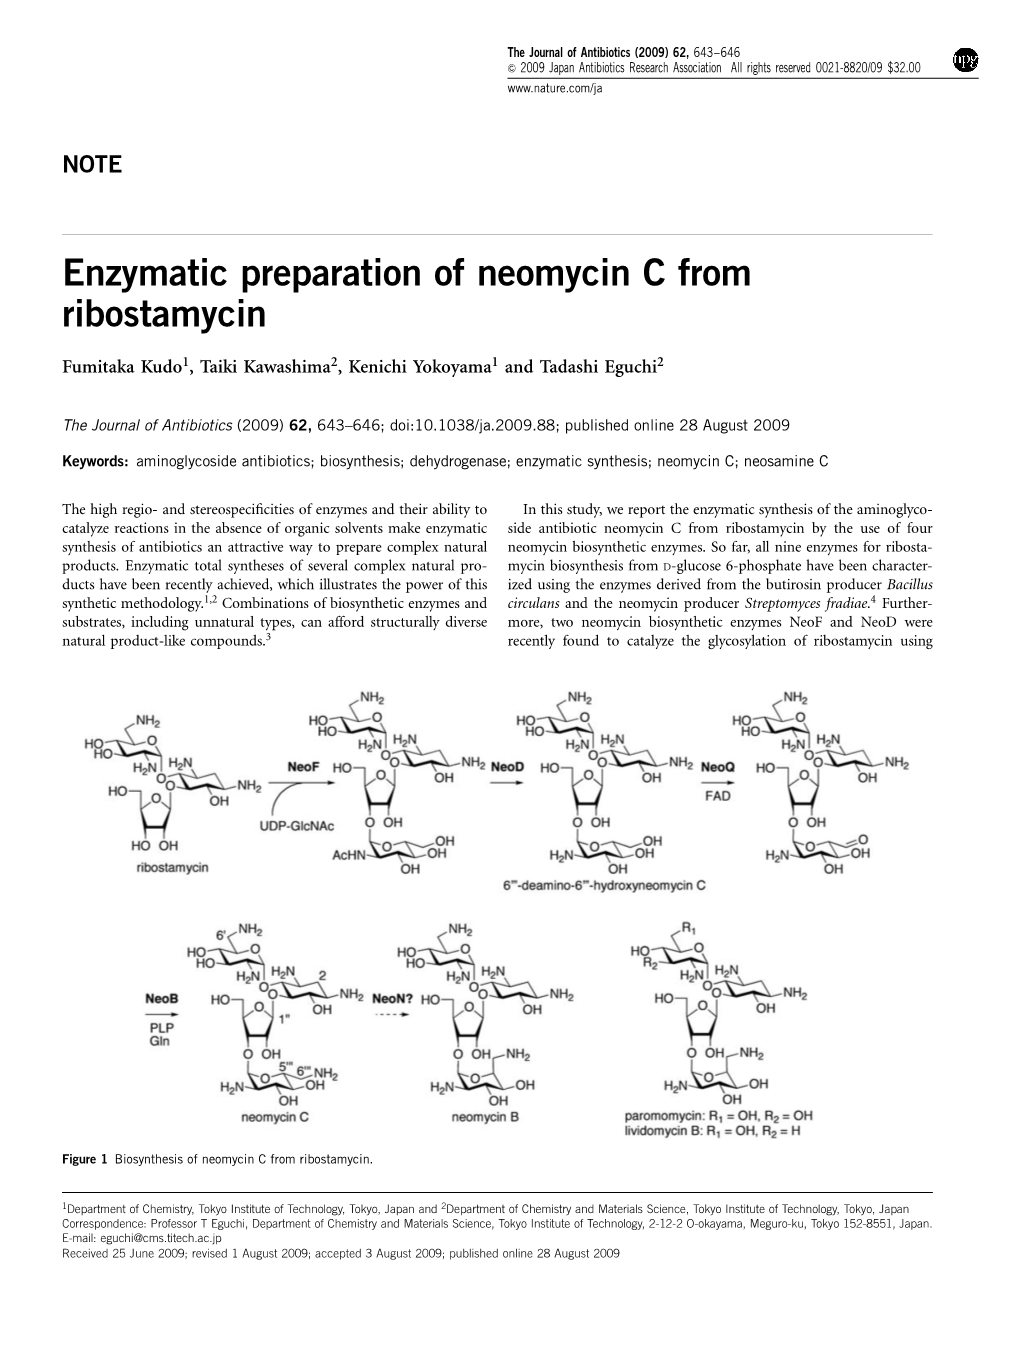 Enzymatic Preparation of Neomycin C from Ribostamycin